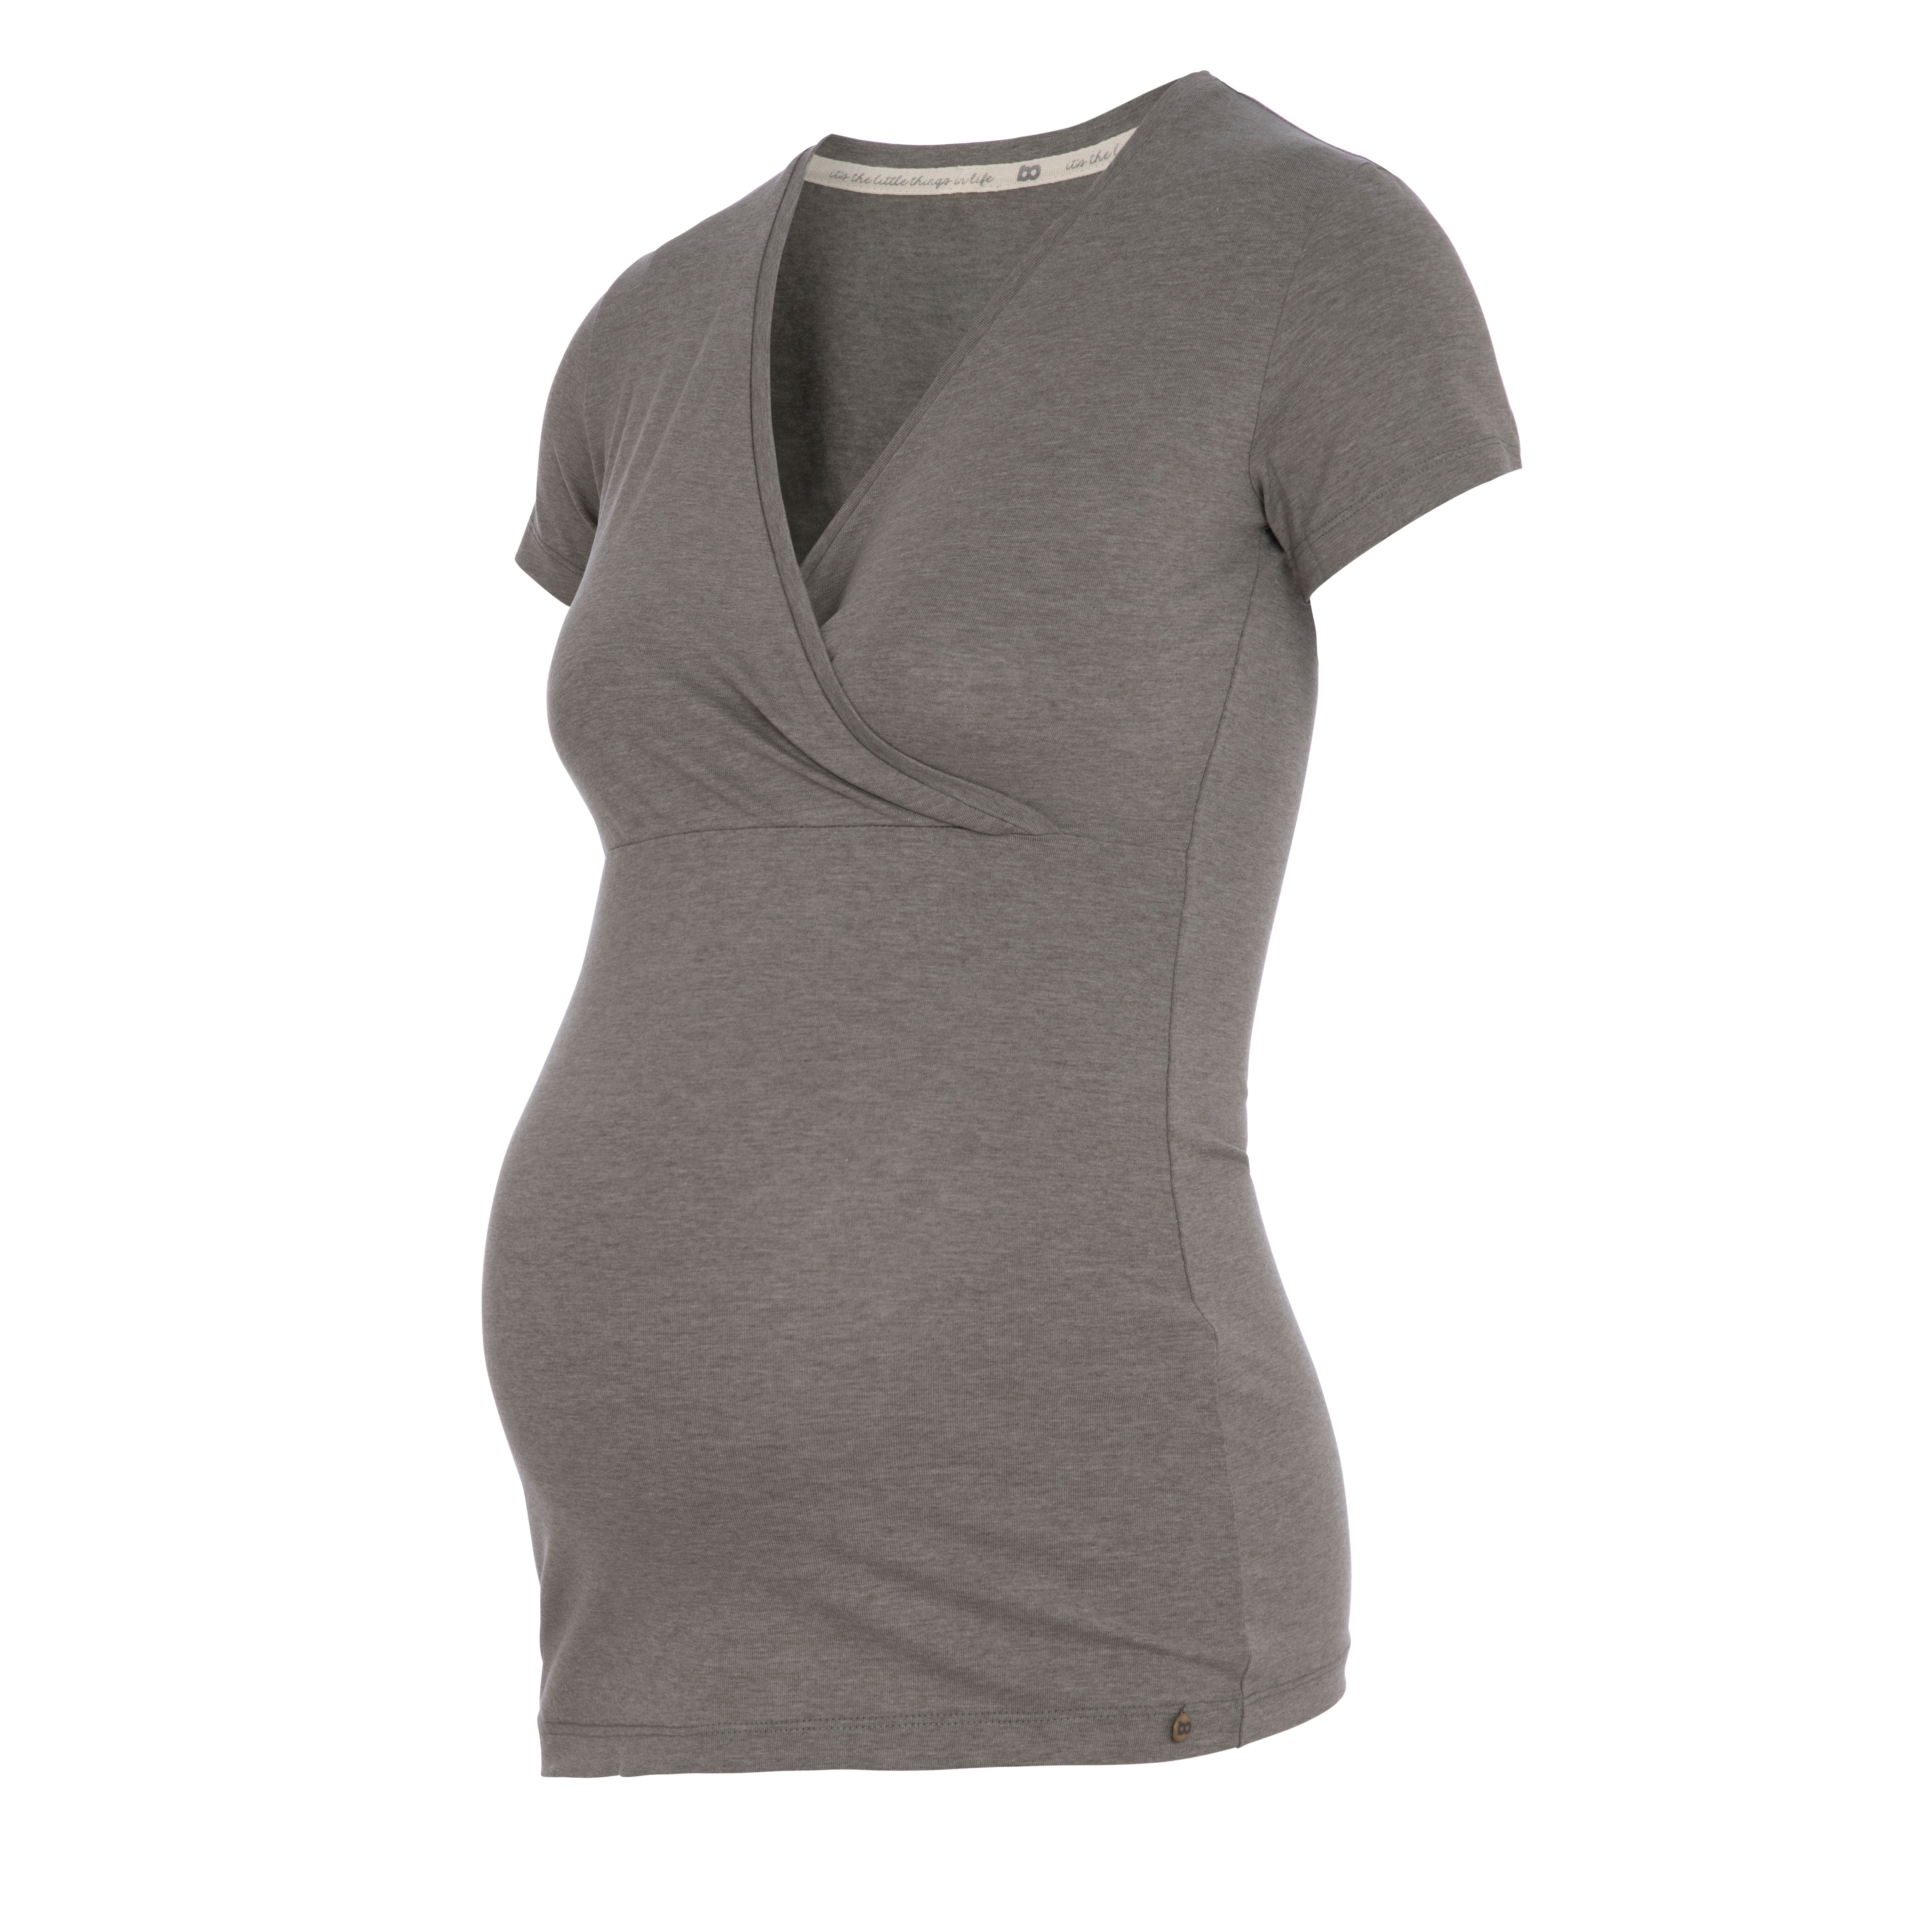 Maternity T-shirt Glow hazel brown - L - With nursing function